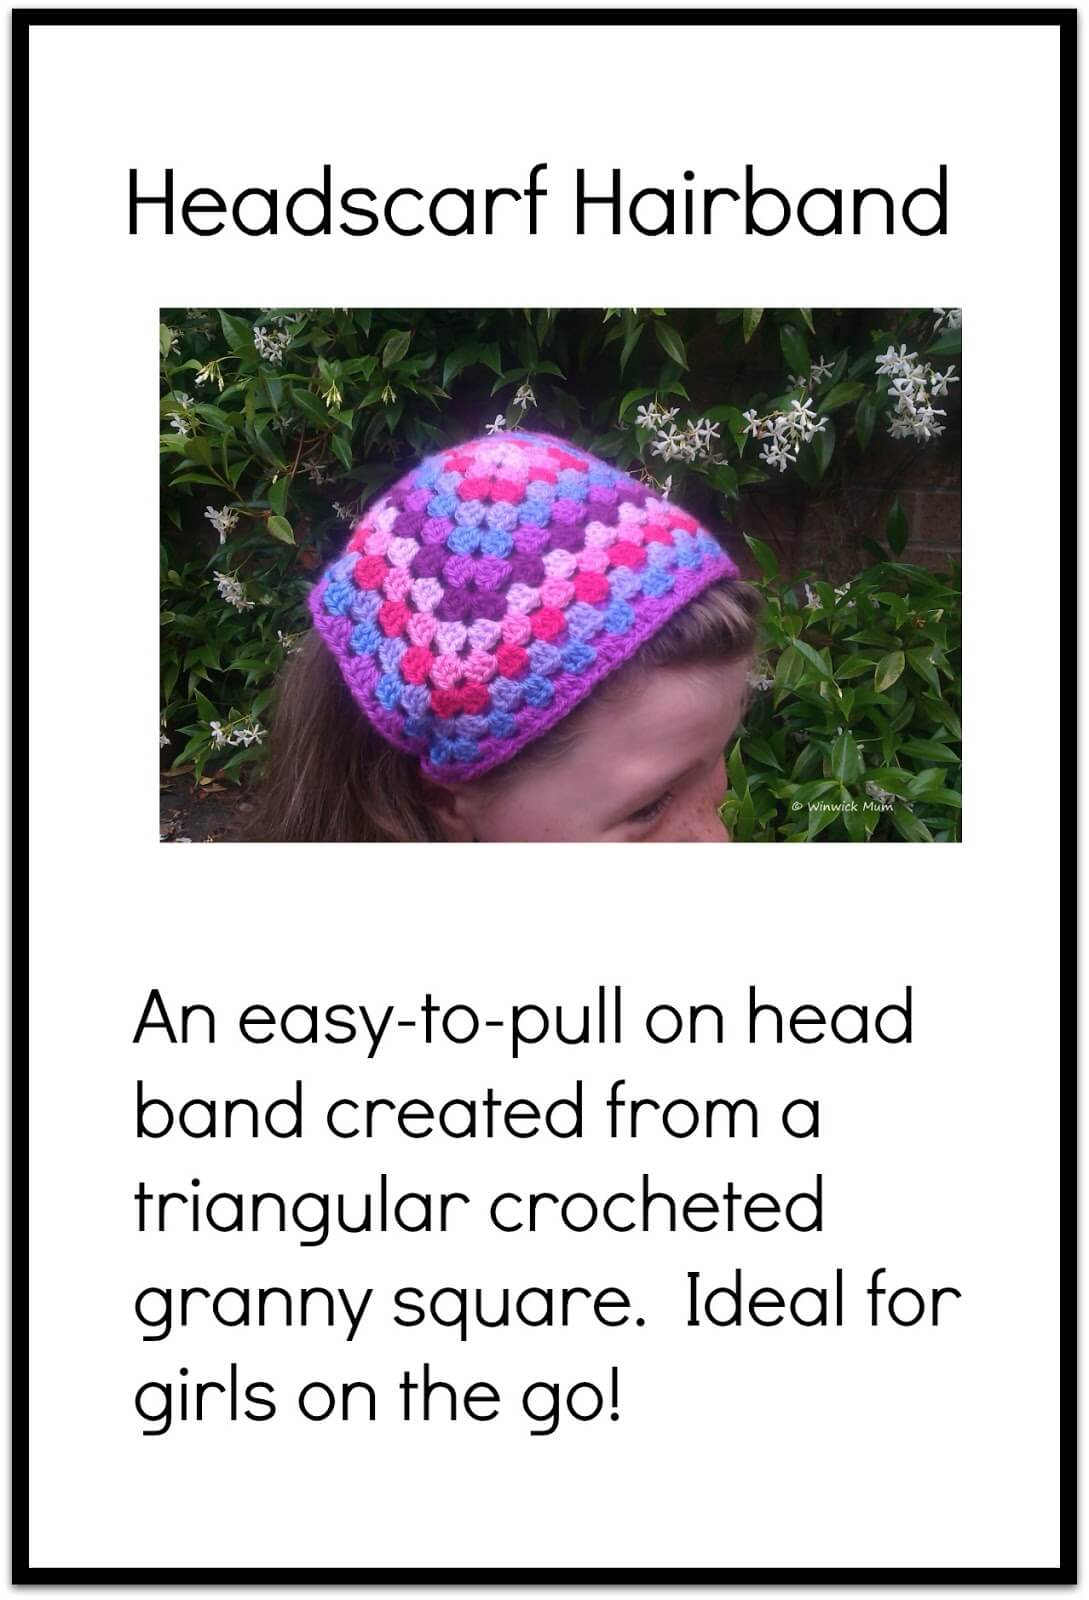 https://www.winwickmum.co.uk/wp-content/uploads/2020/05/Headscarf2Bhairband.jpg